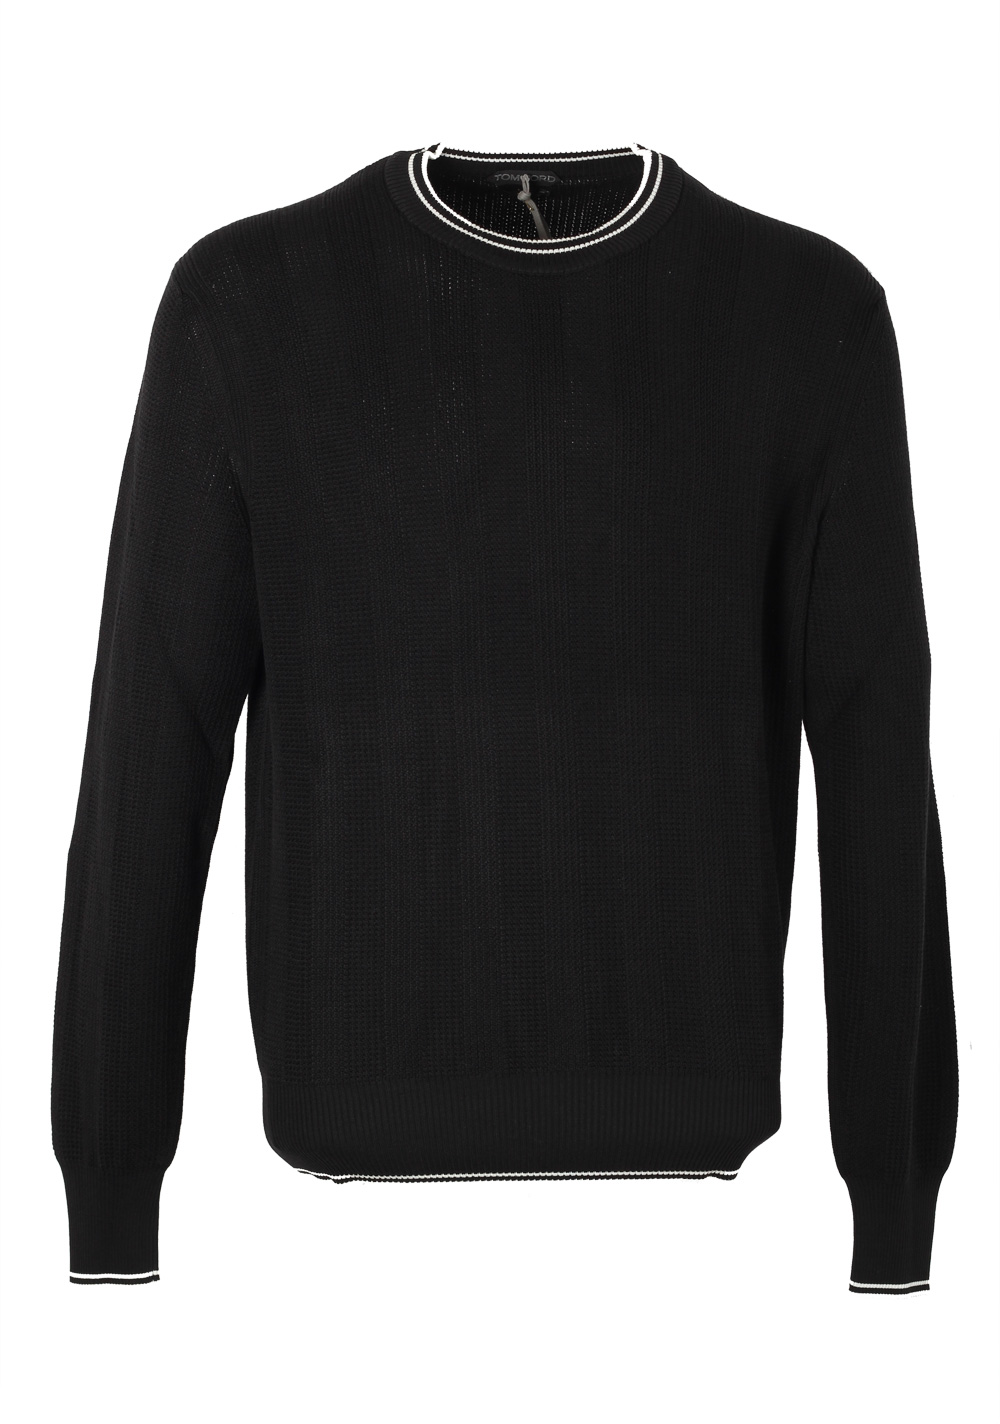 TOM FORD Black Crew Neck Sweater Size 54 / 44R U.S. Silk Cotton ...